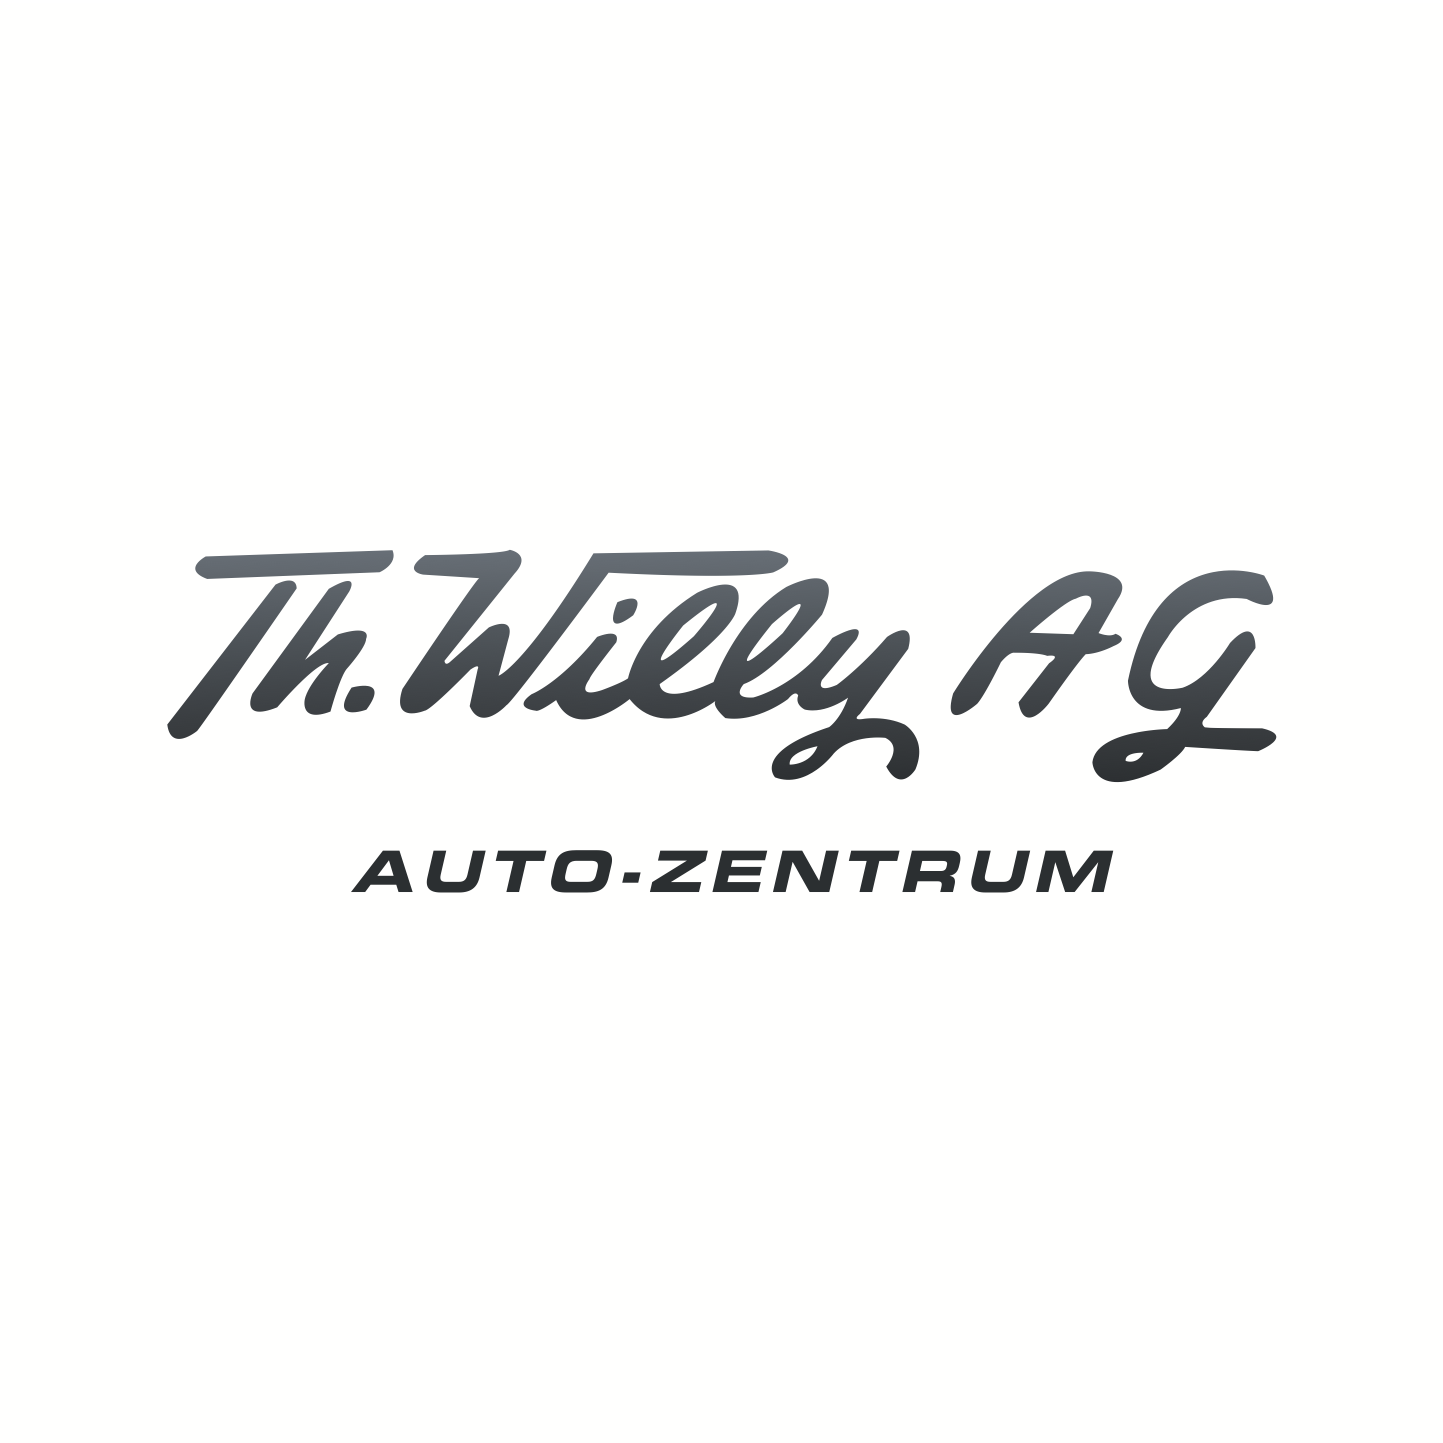 Th. Willy AG Auto-Zentrum (Bern)